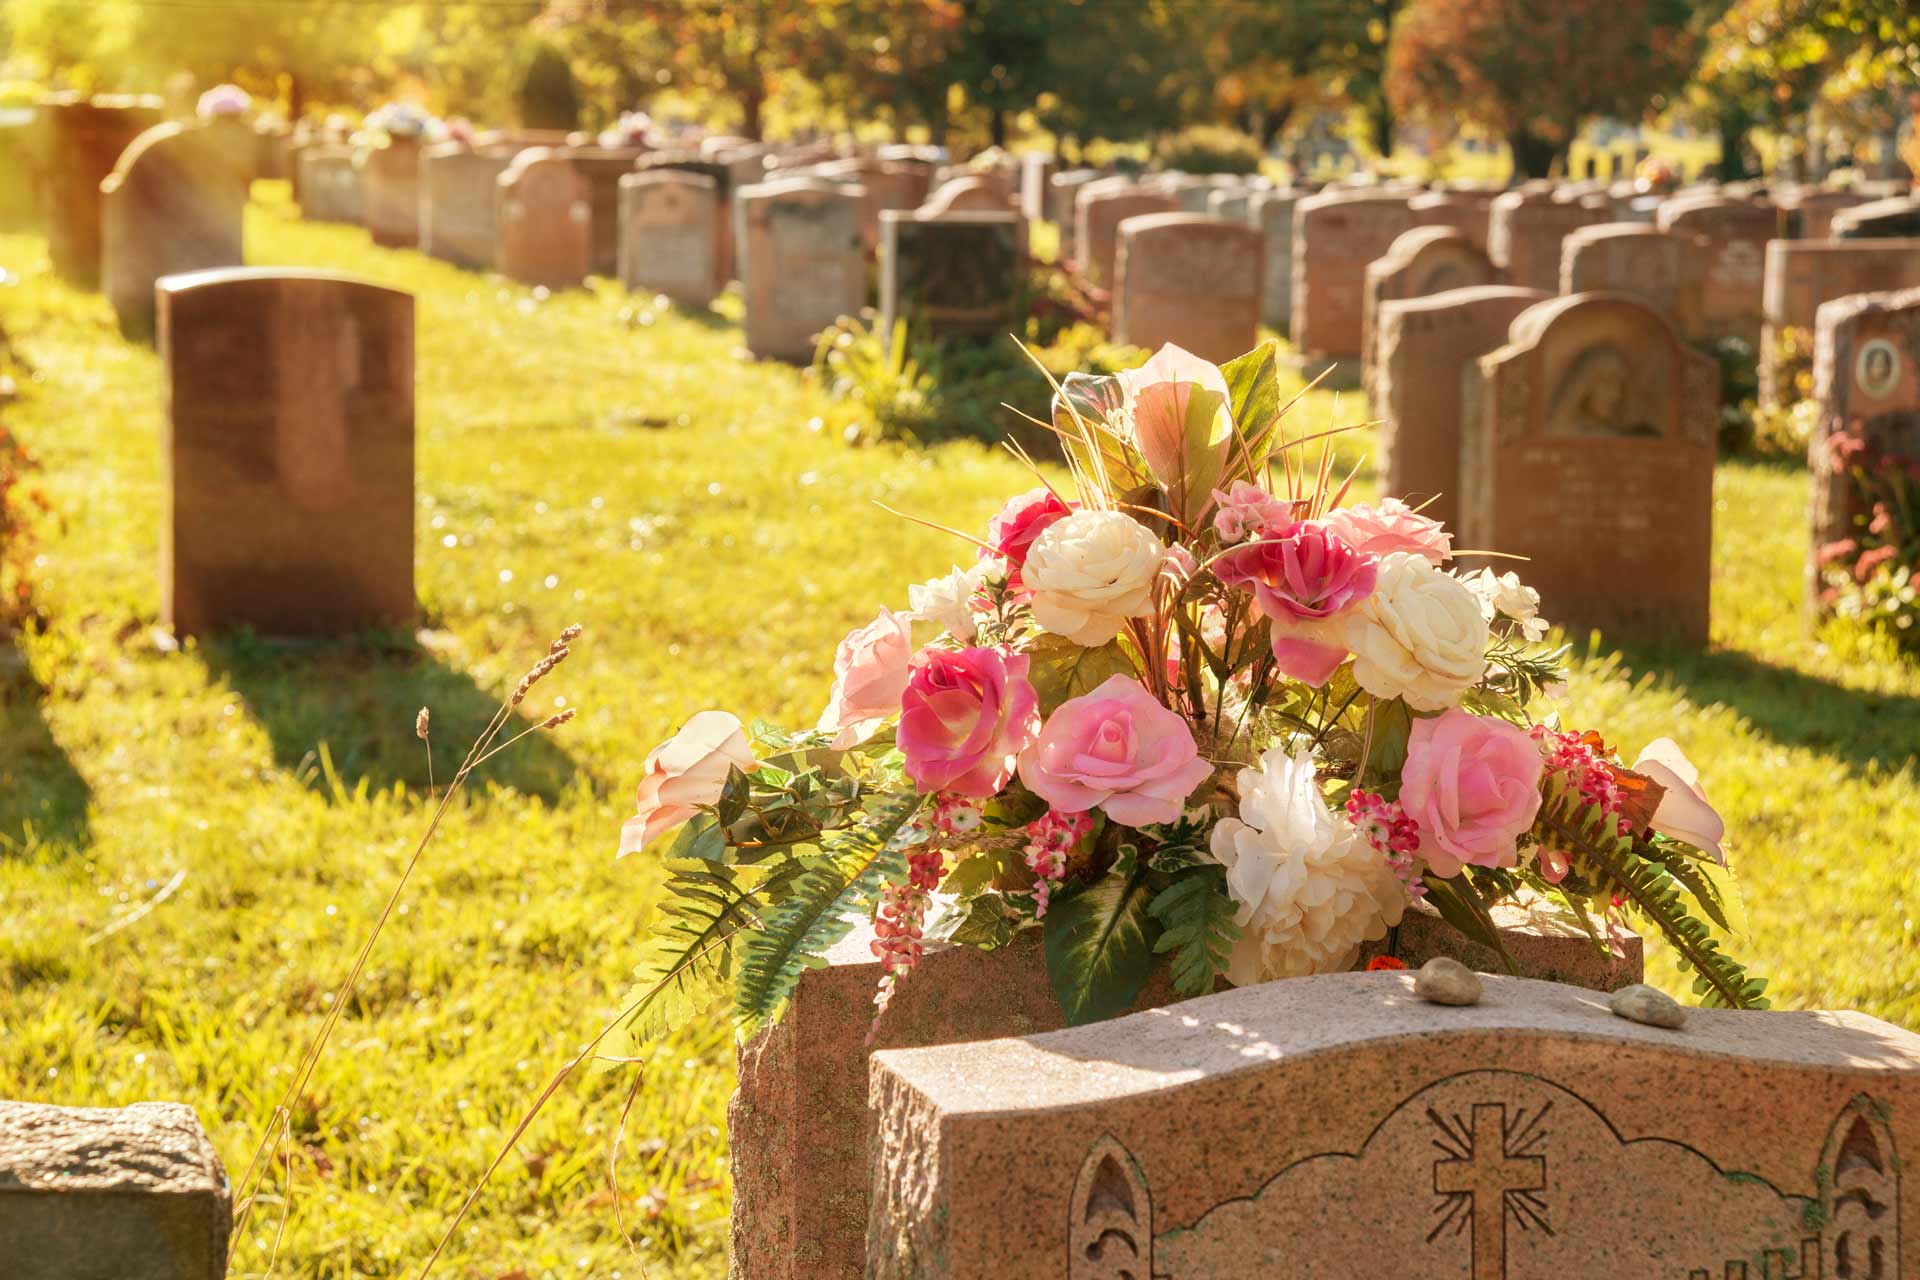 Graveside Burial Service